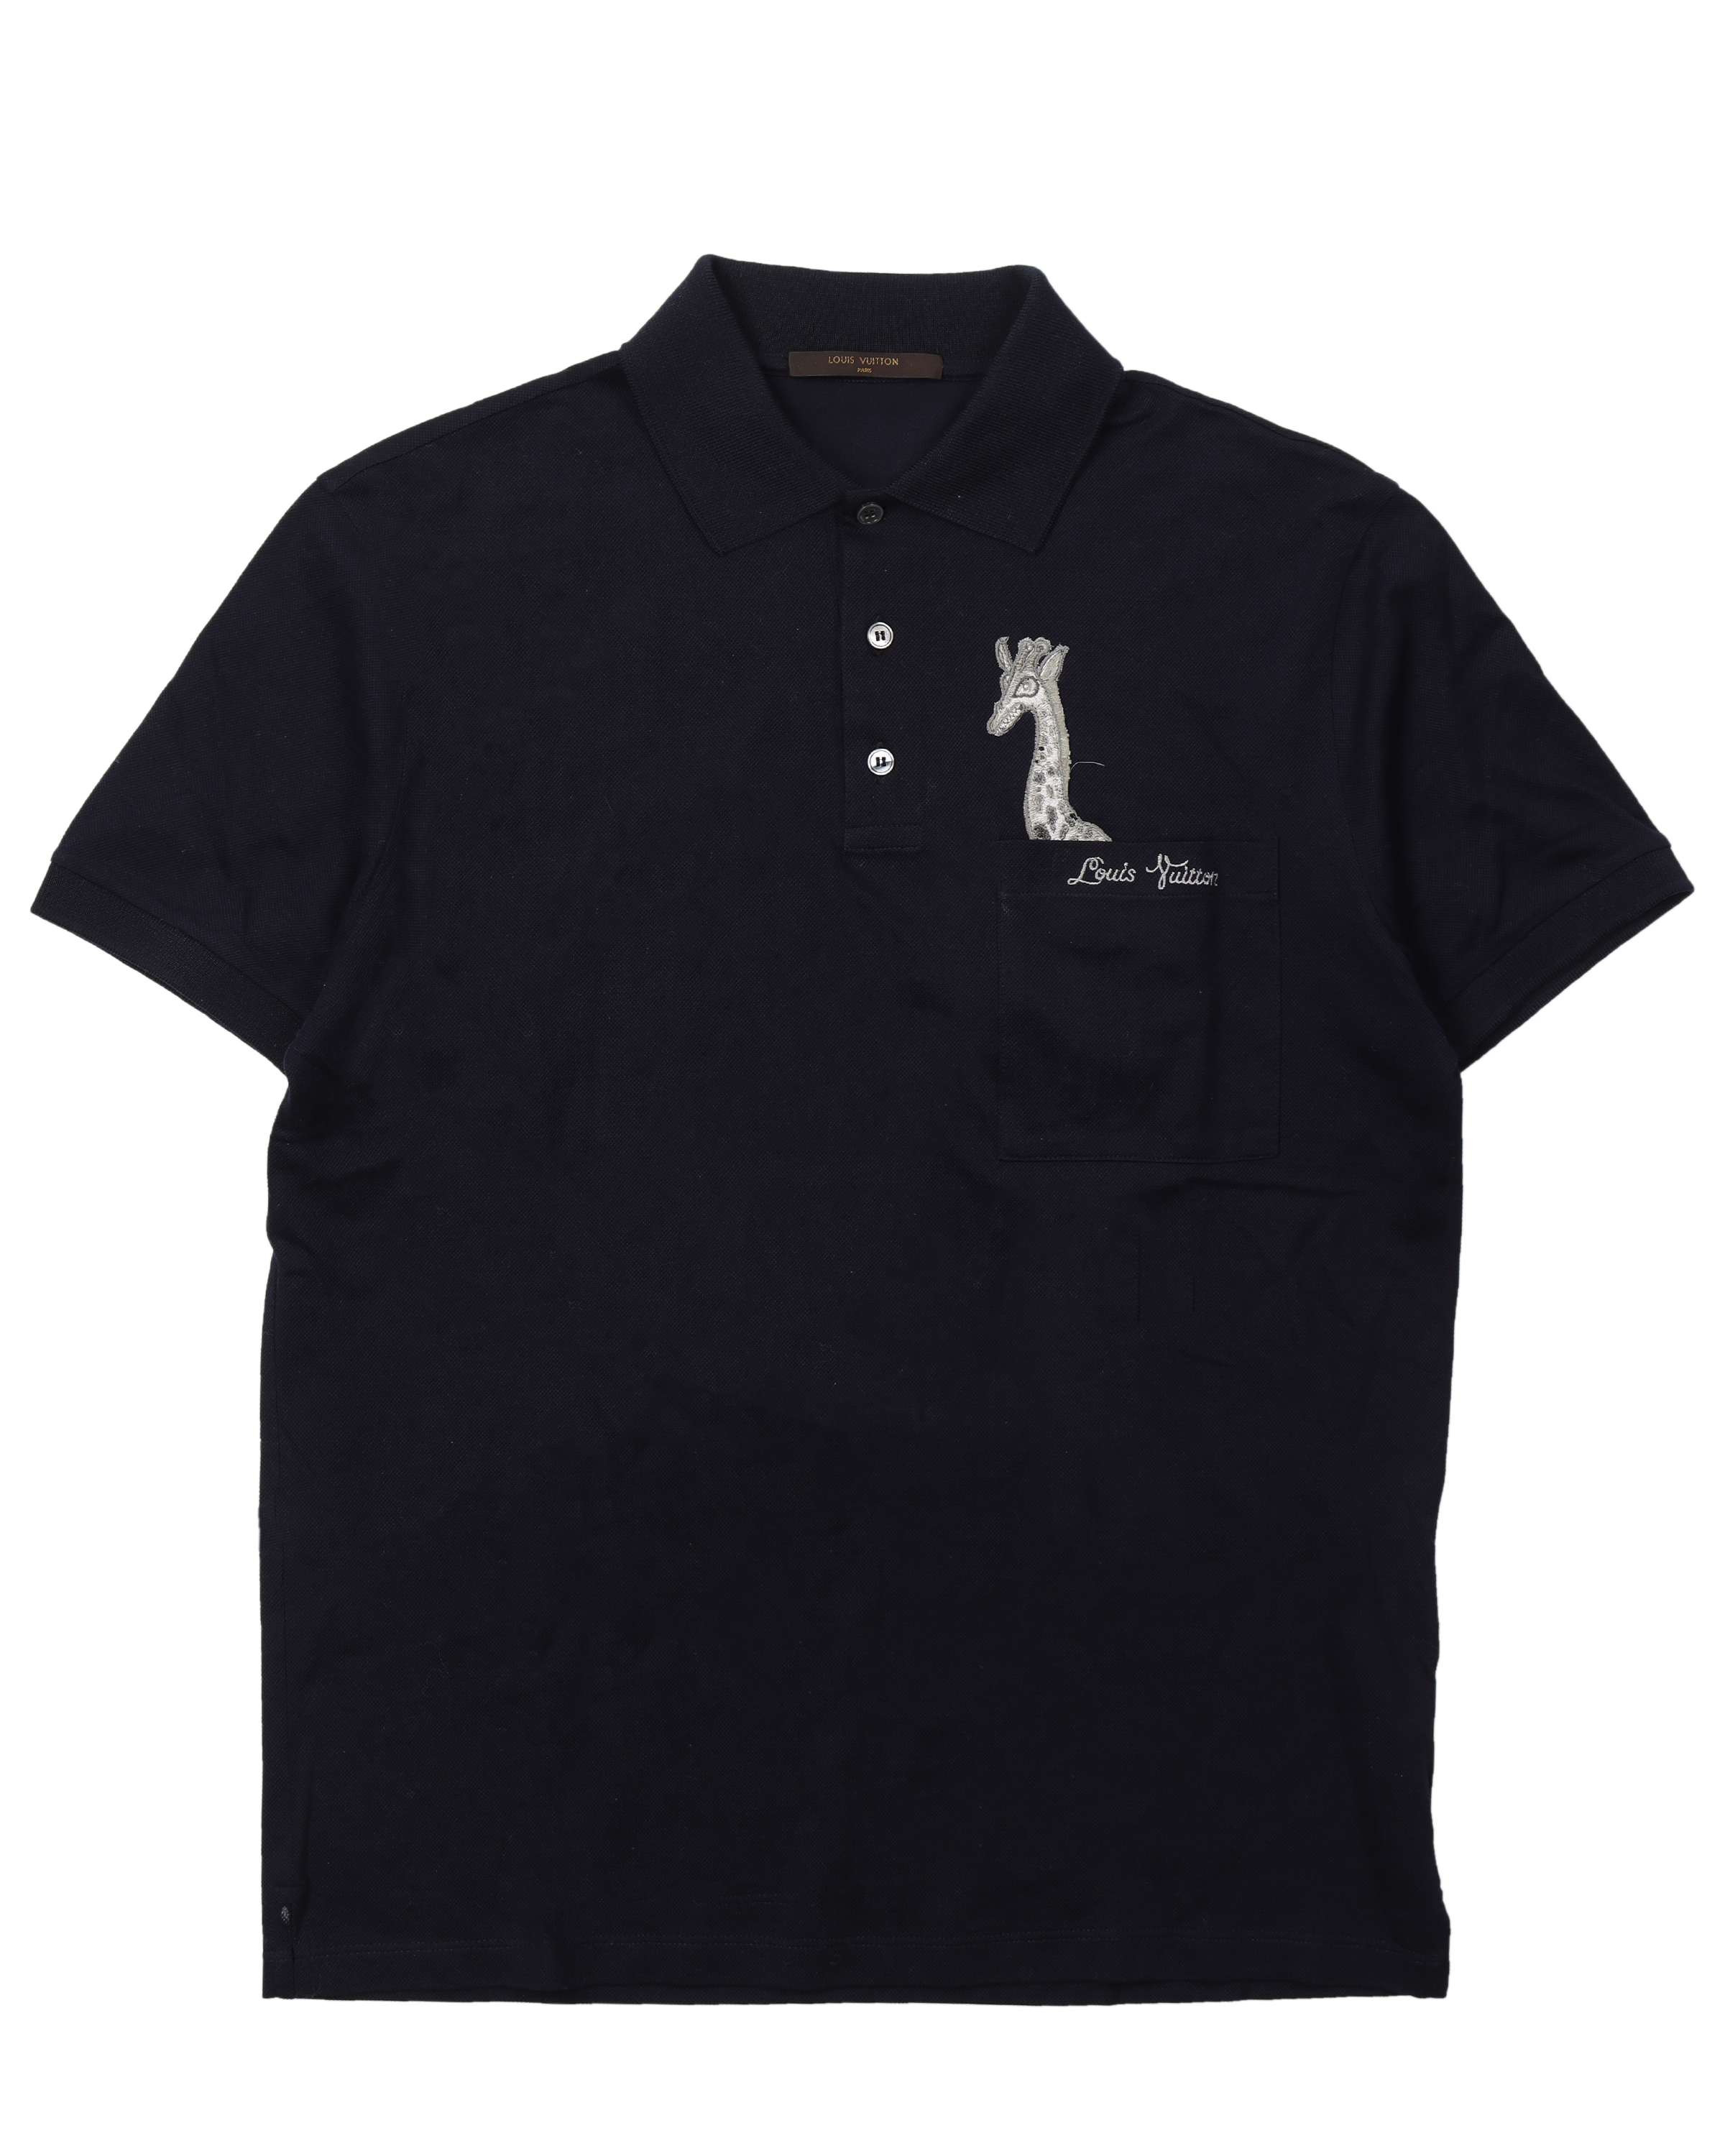 Louis Vuitton Chapman Brothers Embroidered Giraffe Polo Shirt